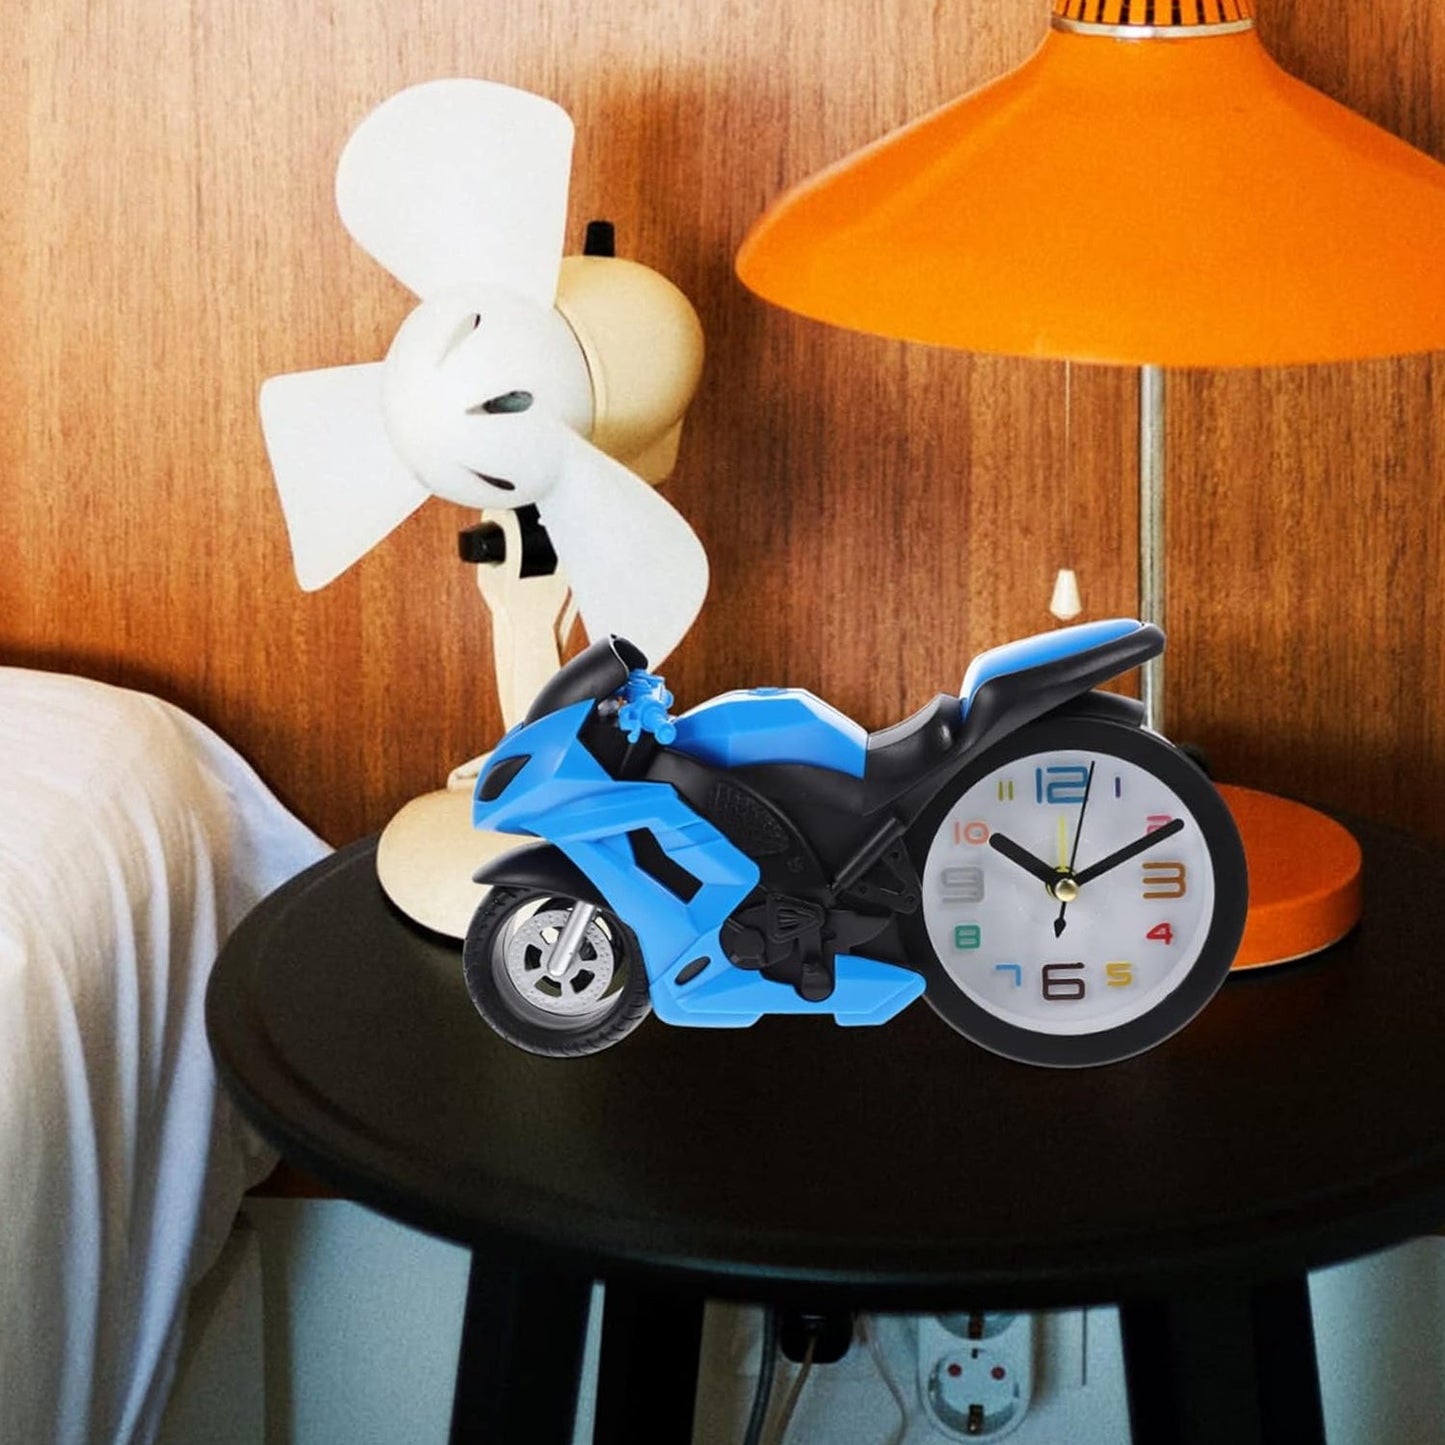 17639 Fashioned Alarm Clock Novelty Retro Motorcycle / Motorbike Engine Style Clocks Alarm Clock Desktop Decoration Kids Gift